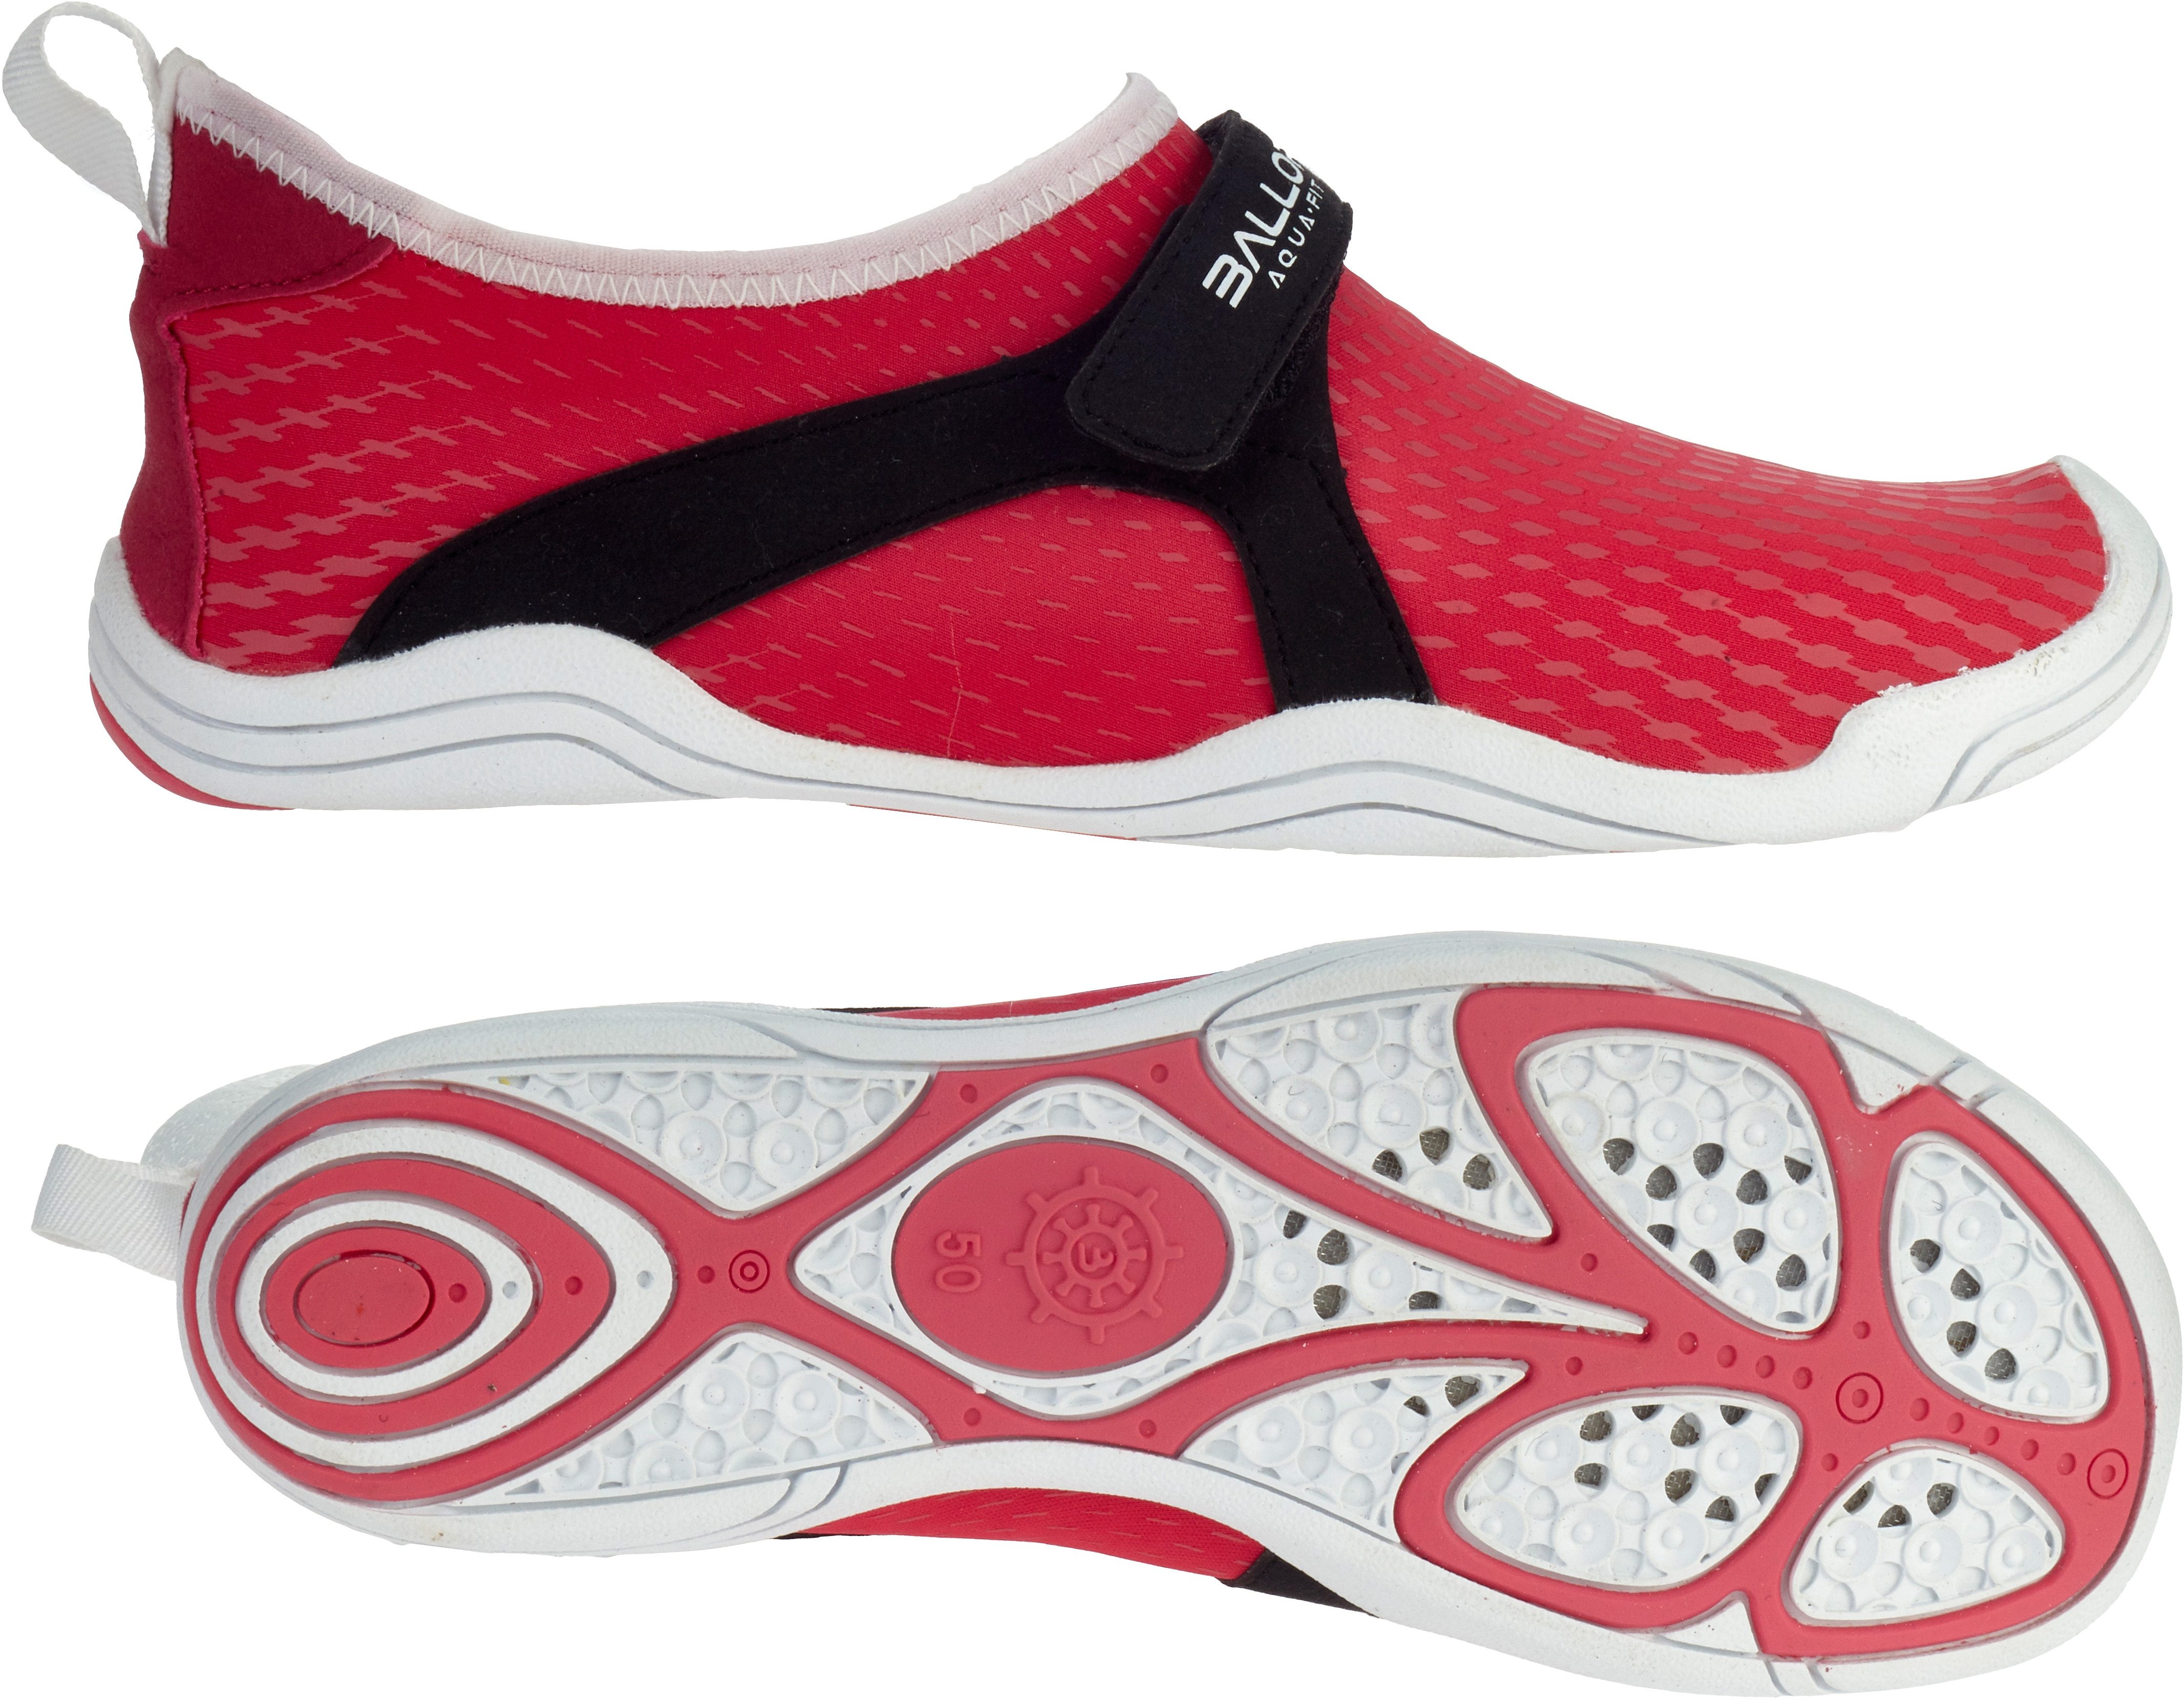 NU 15% KORTING: Ballop barefoot-schoenen, »Aqua Fit Typhoon red«